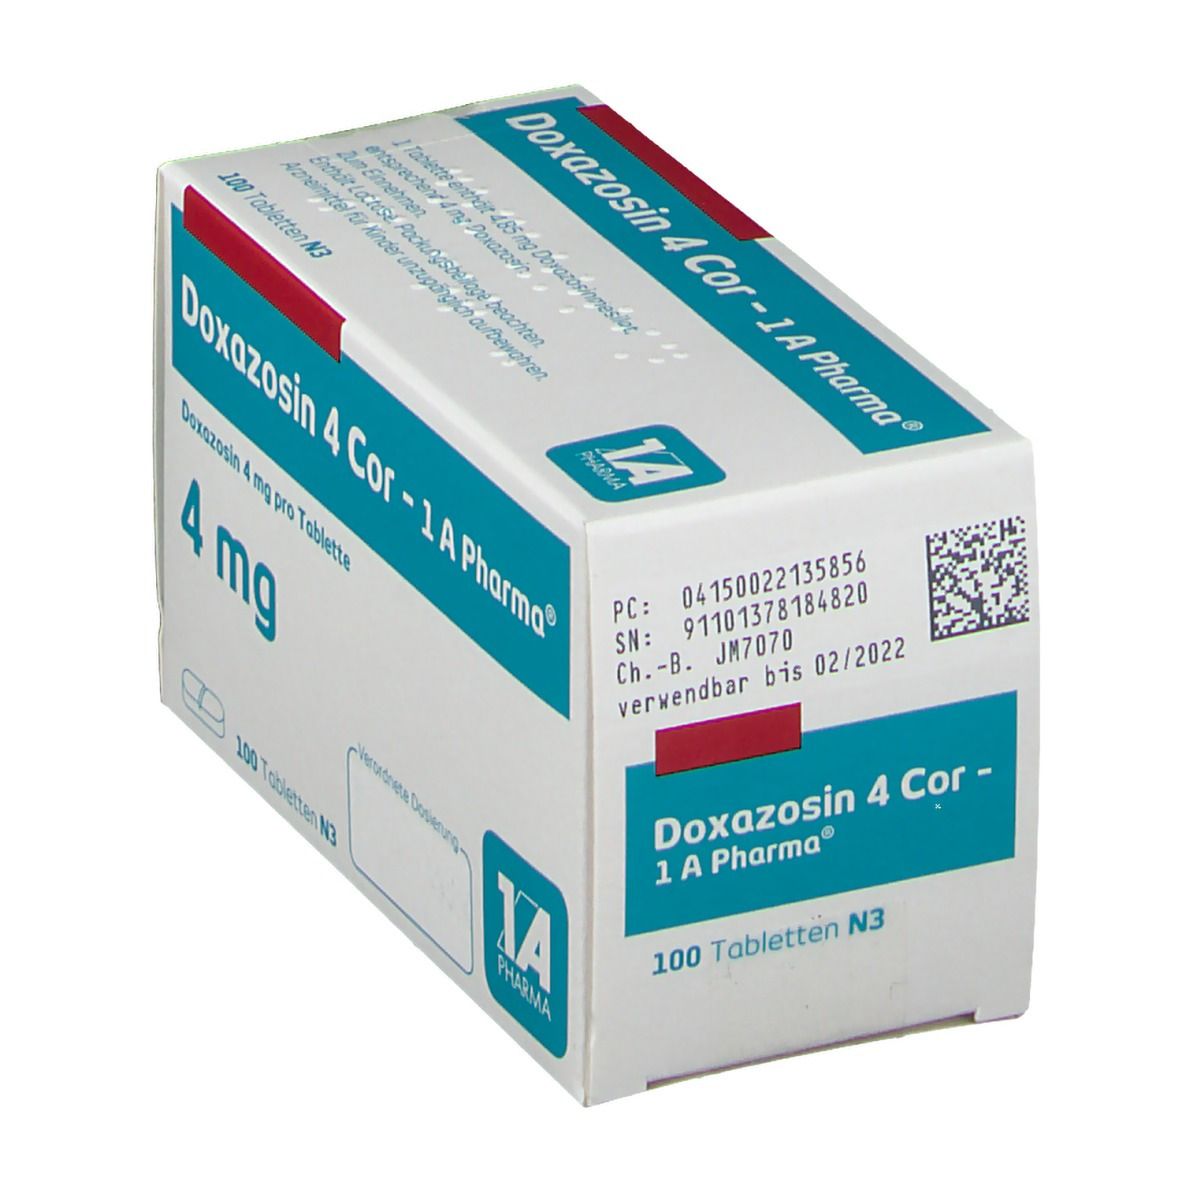 Doxazosin 4 Cor 1A Pharma®